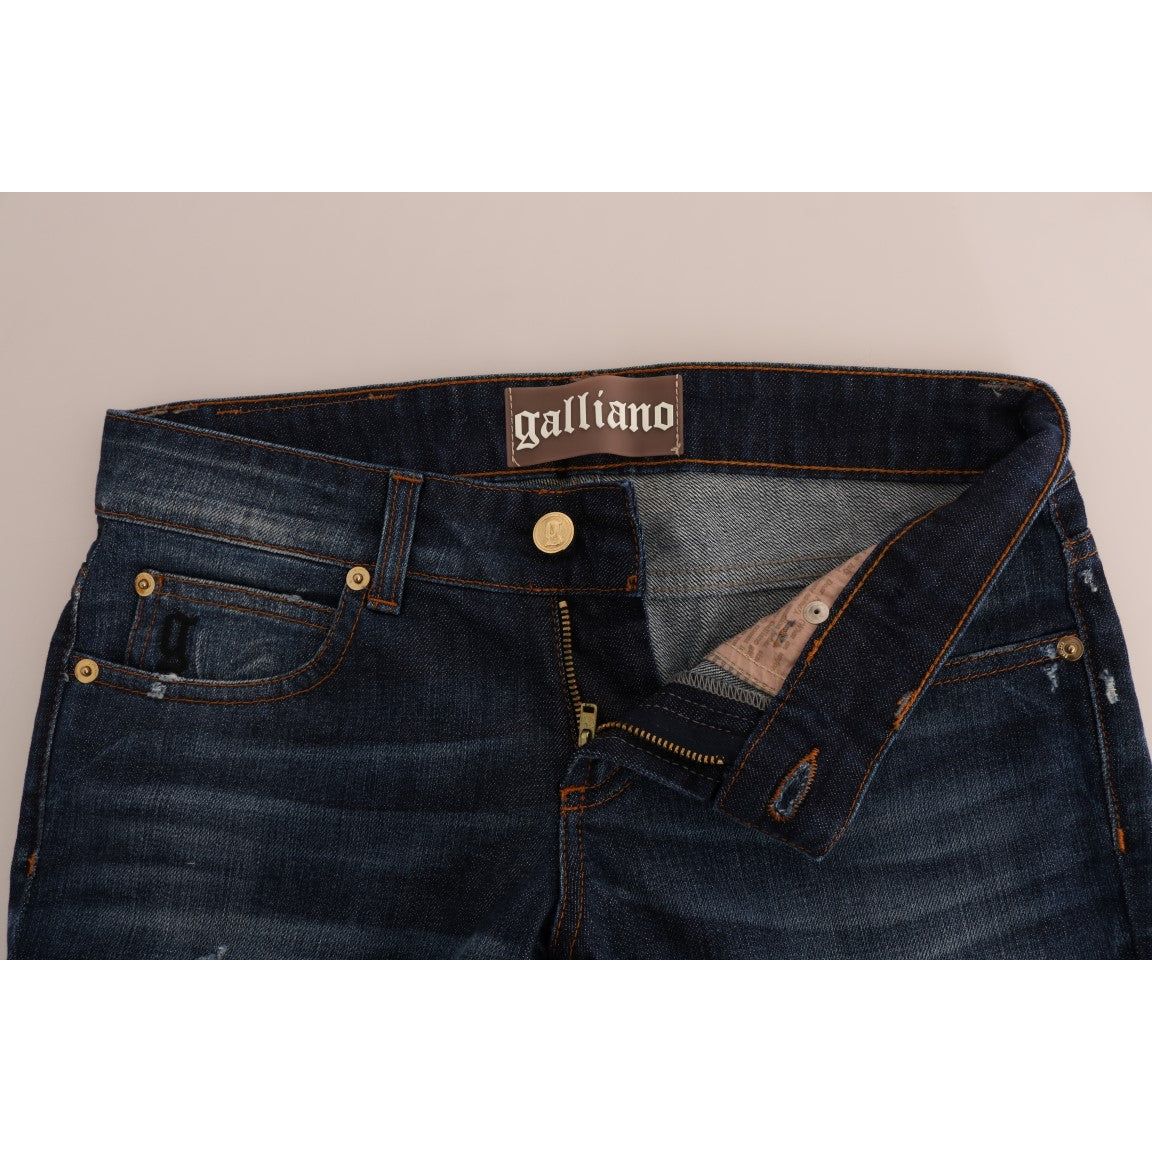 John Galliano Stylish Skinny Low Rise Denim Jeans blue-wash-cotton-stretch-skinny-low-jeans 490796-blue-wash-cotton-stretch-skinny-low-jeans-3.jpg